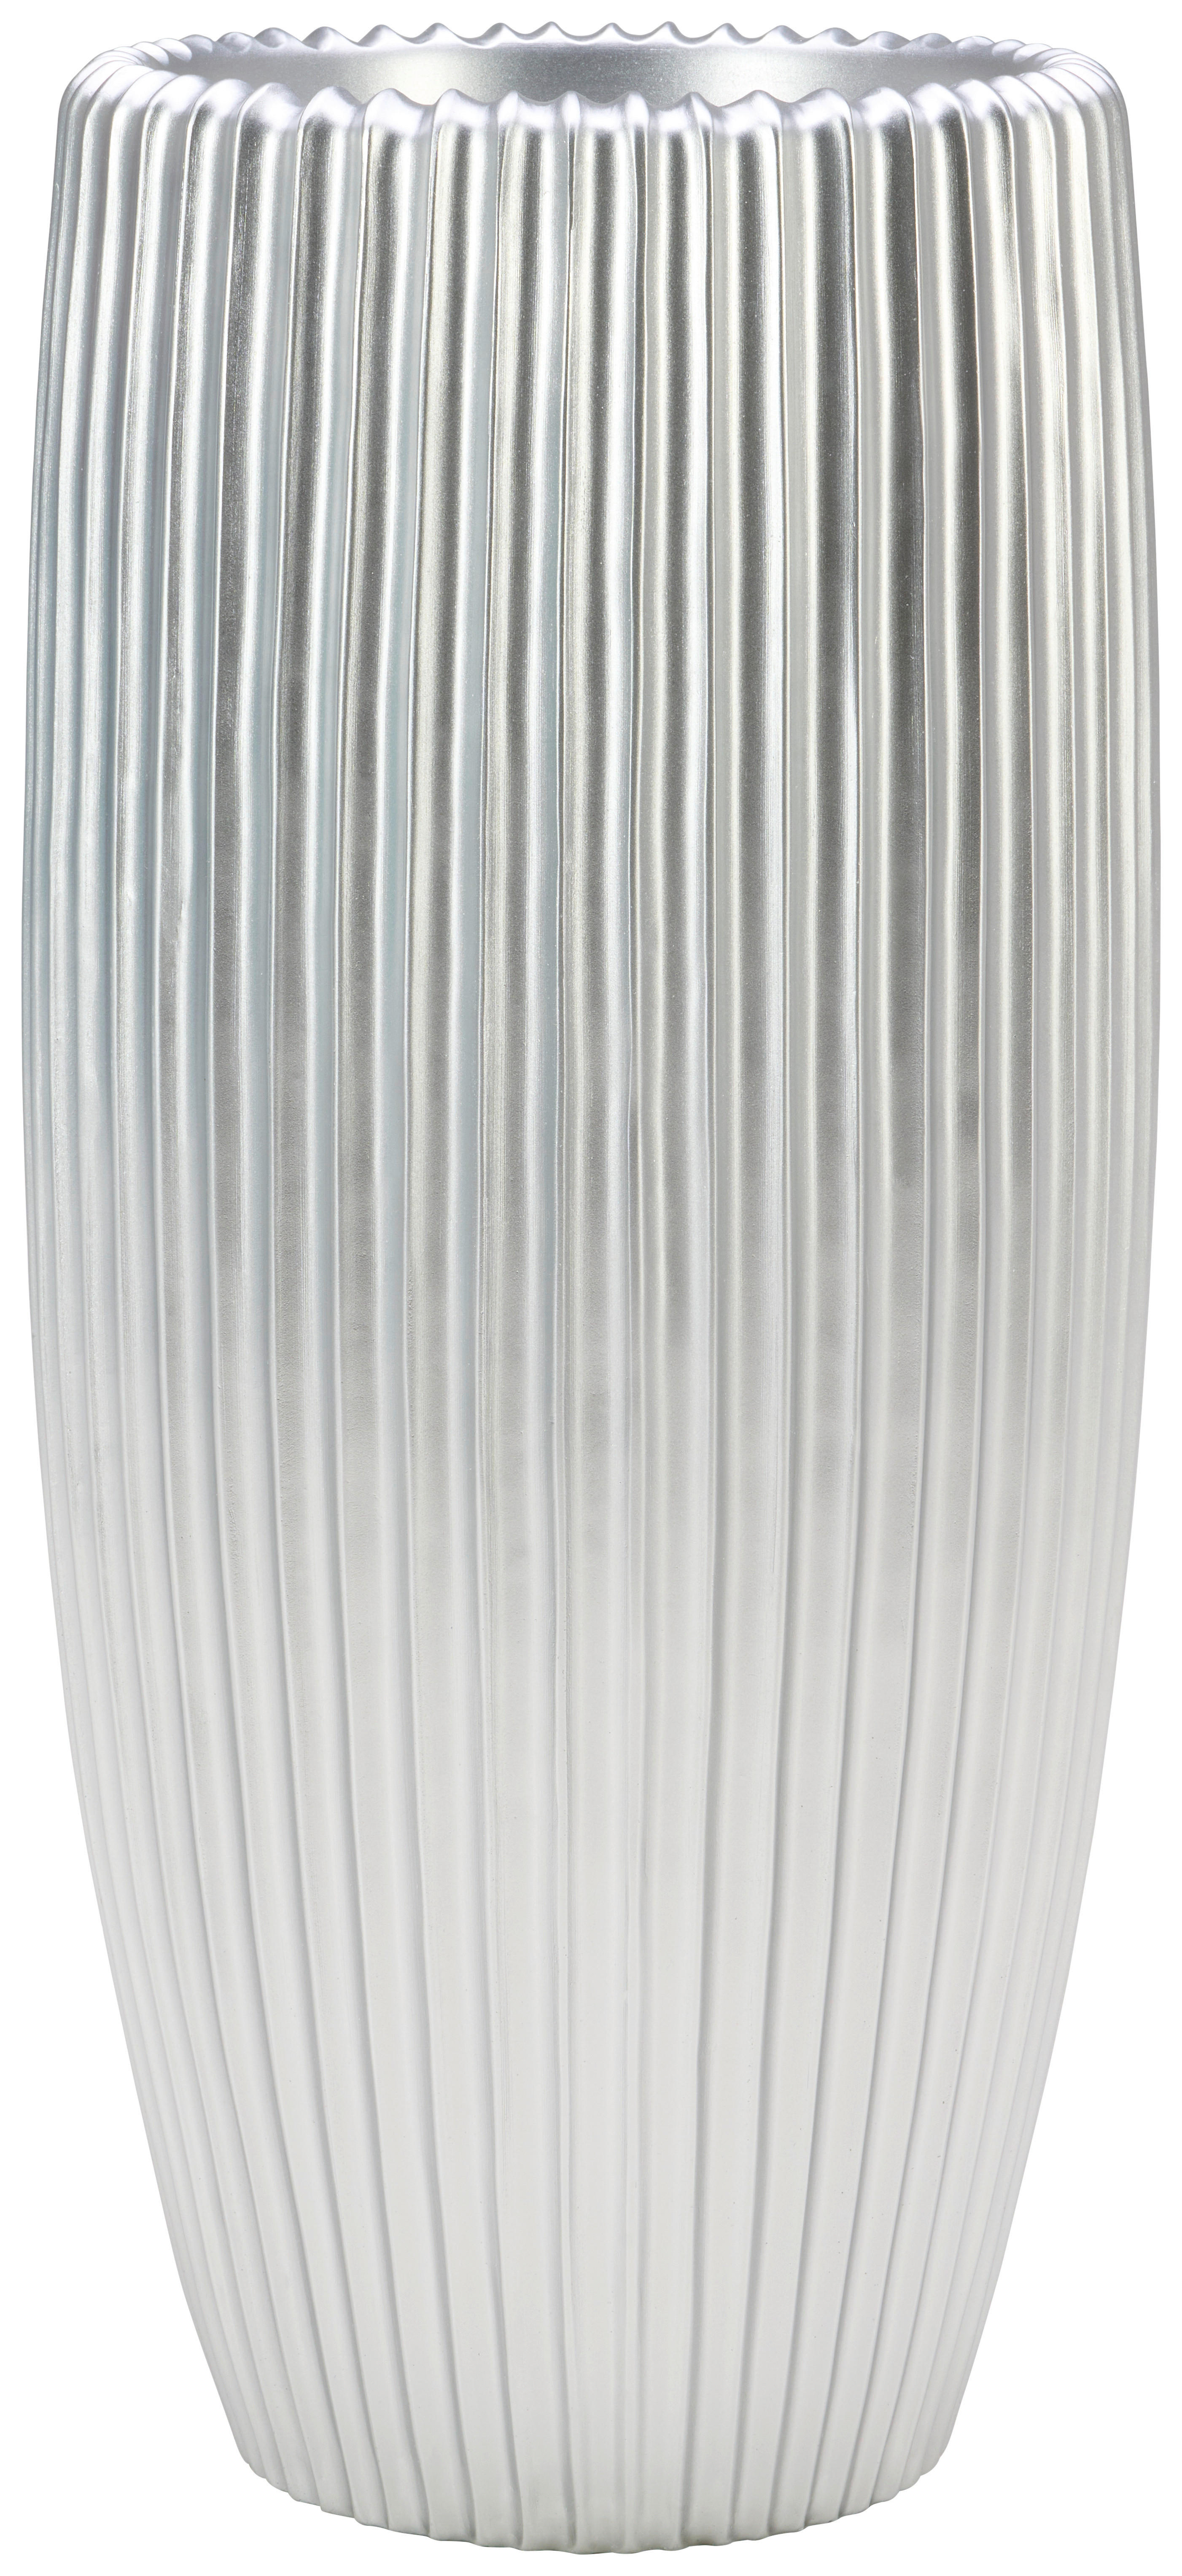 Ambia Home VÁZA, plast, 77 cm - barvy stříbra